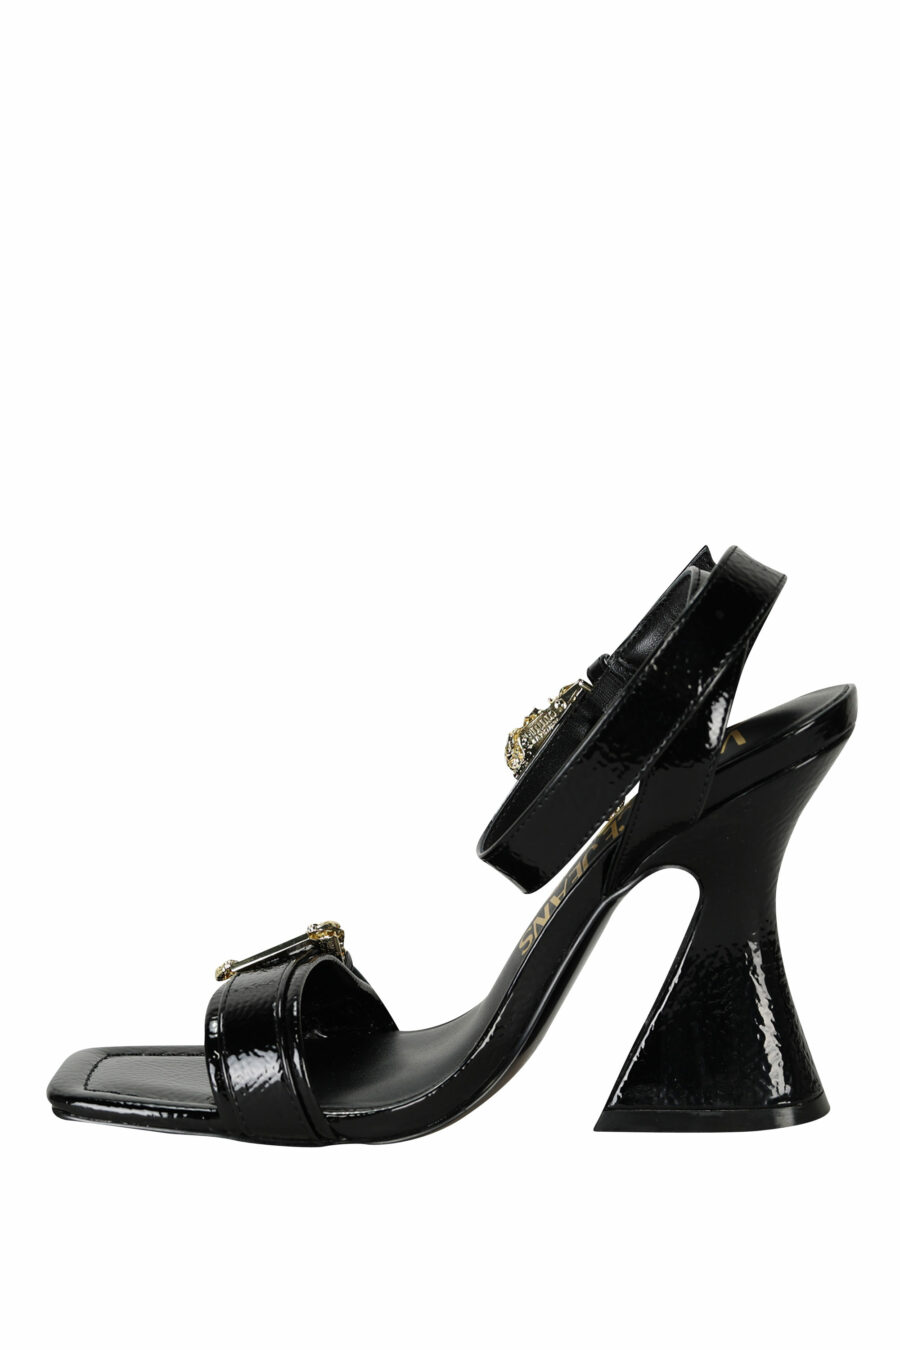 Black heels with gold baroque buckle - 8052019662979 2